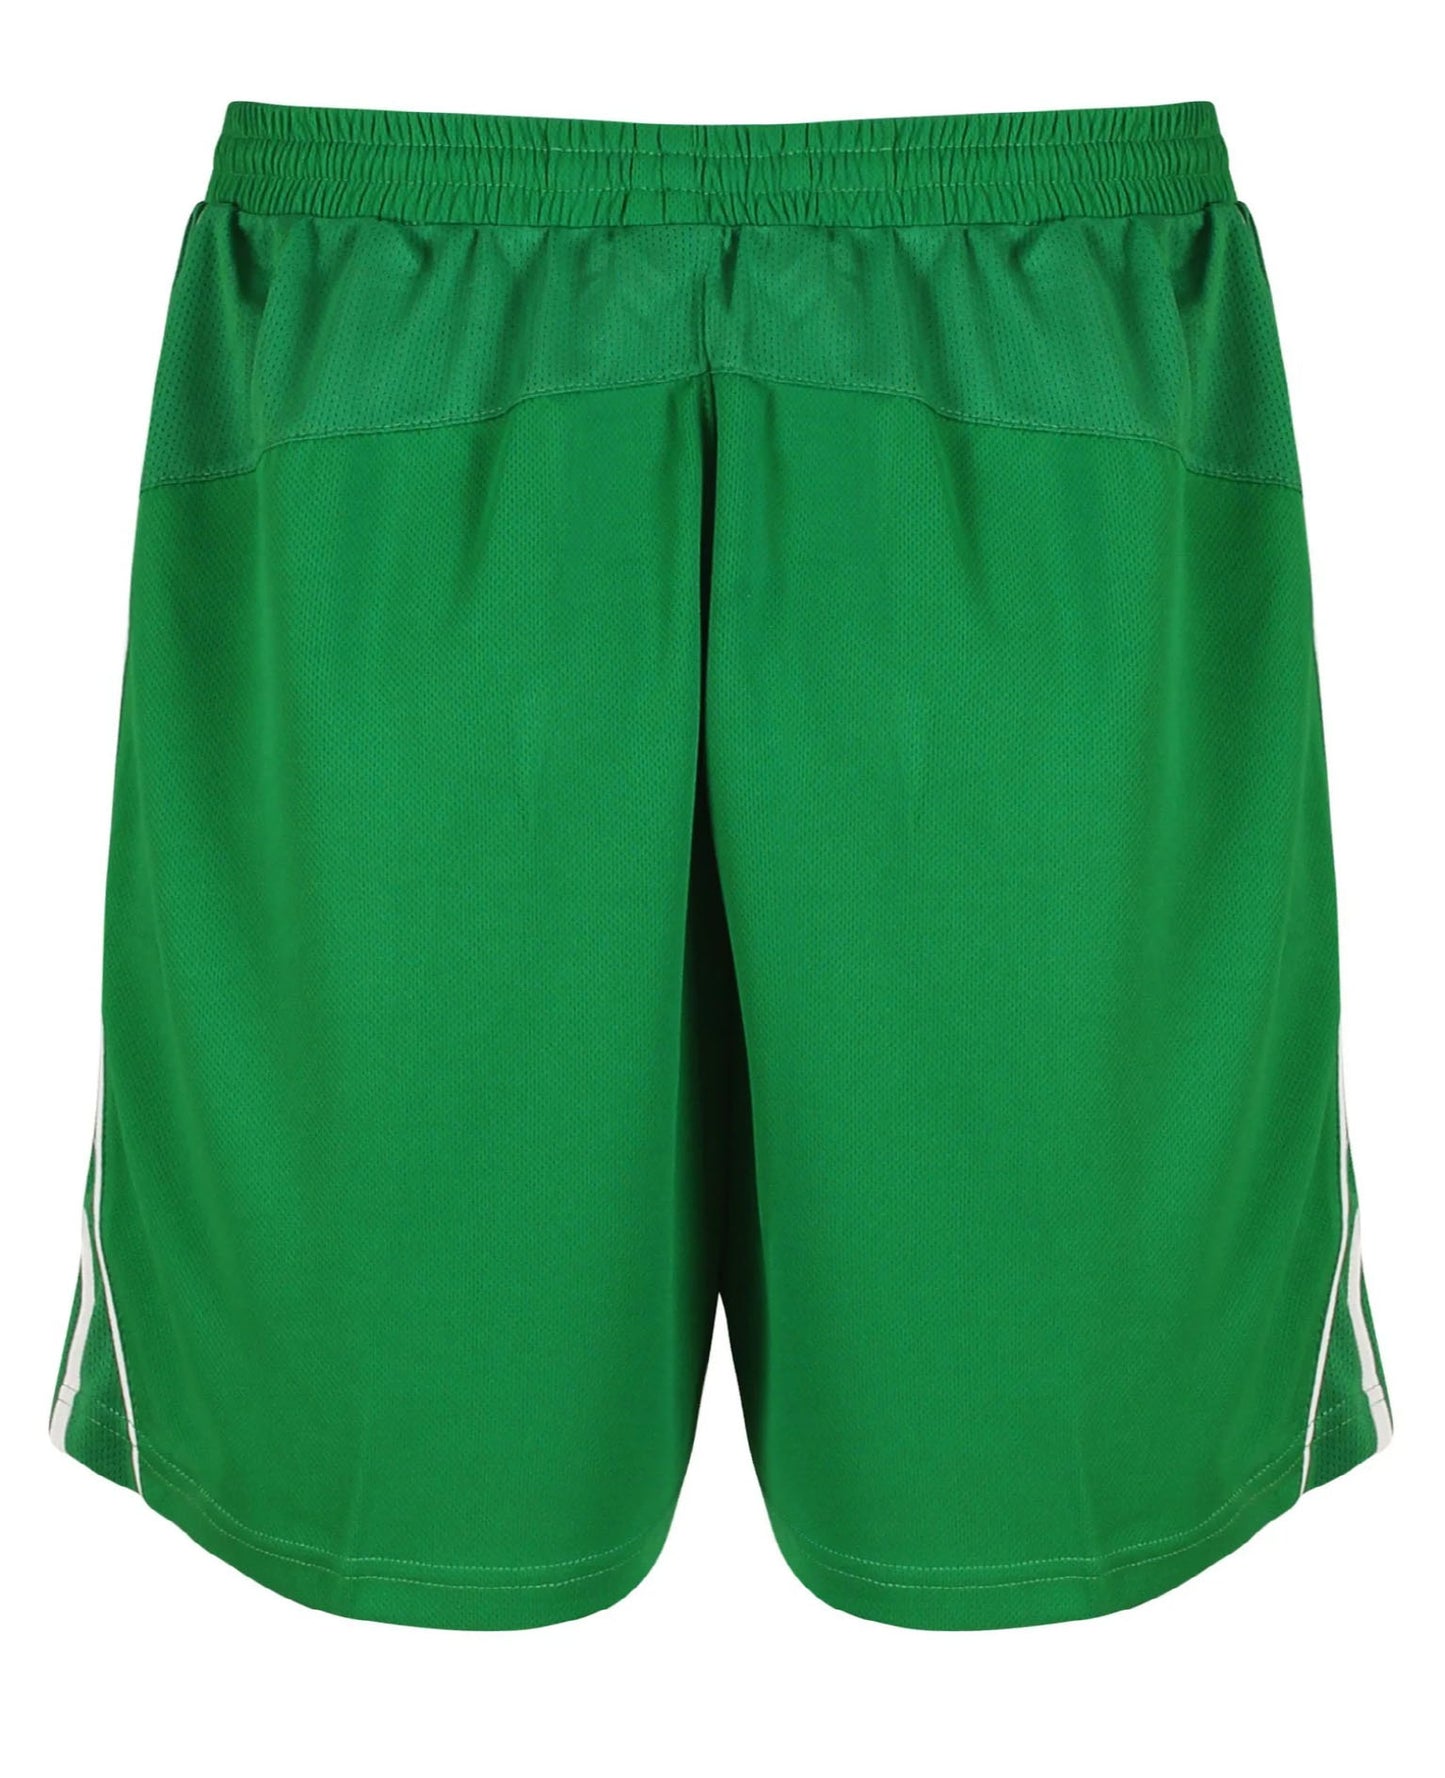 Doodle Mesh Shorts - Green